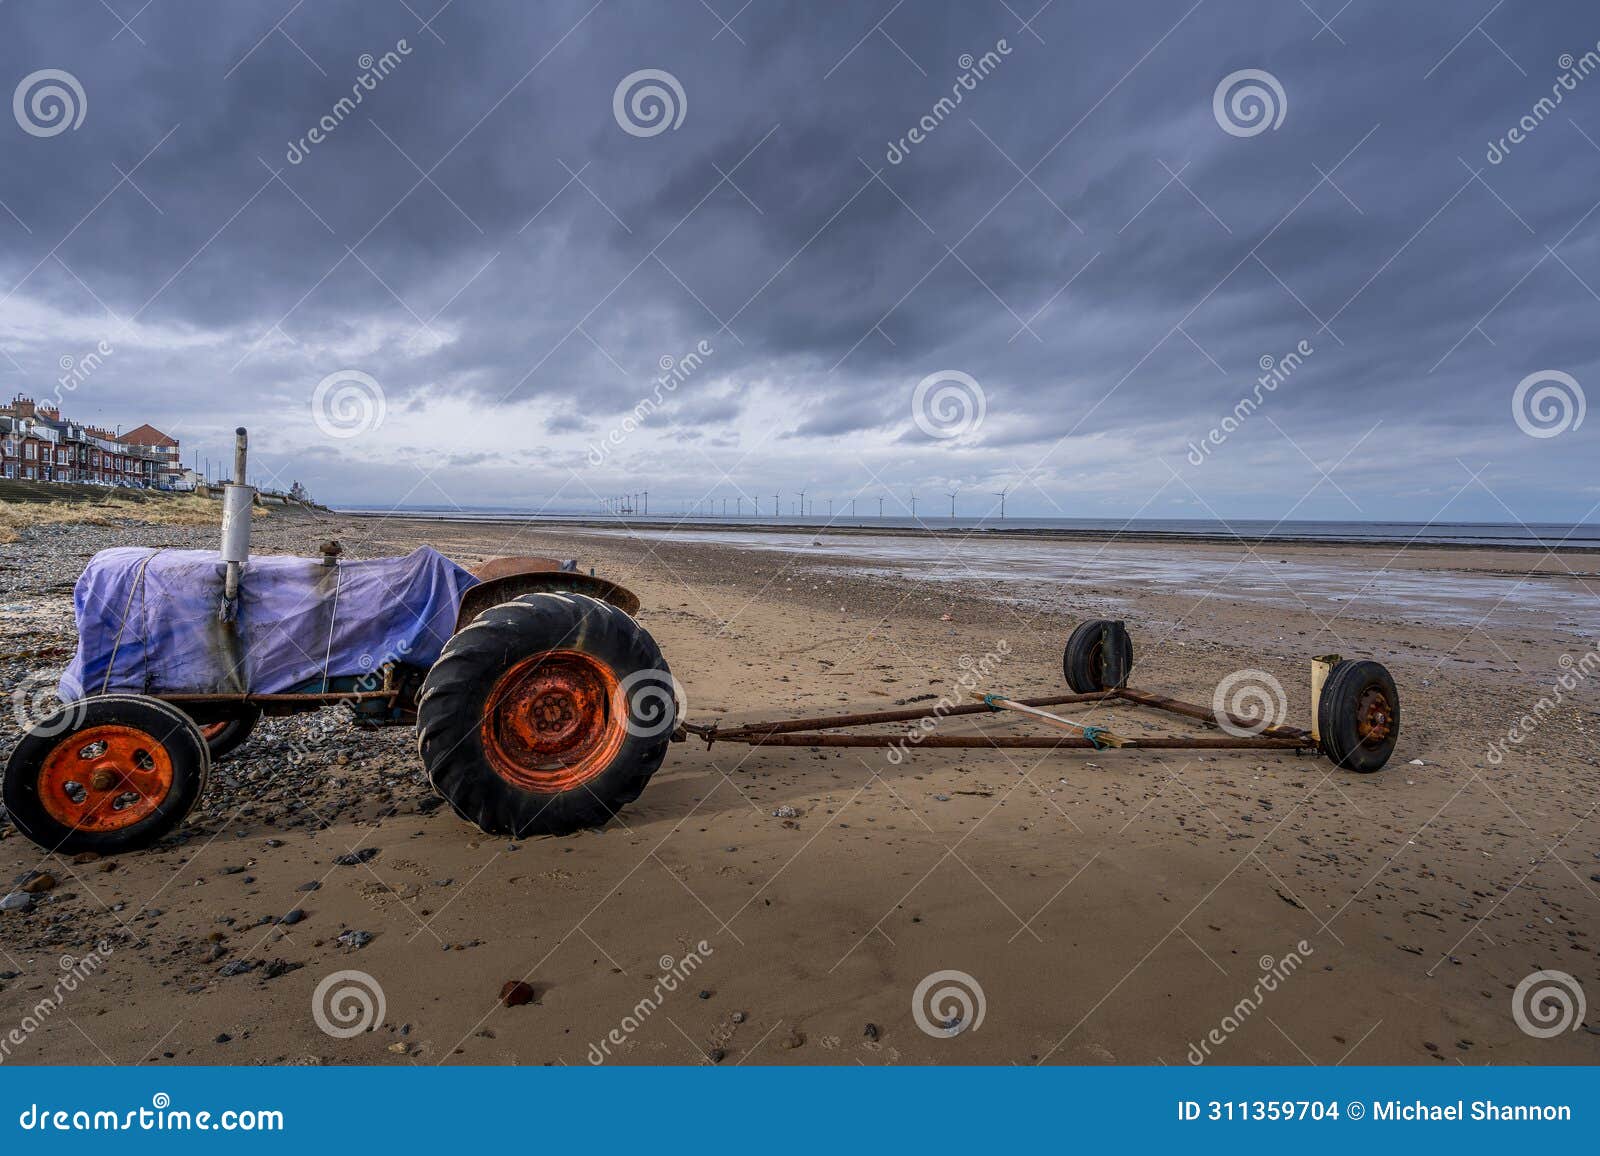 tractor granville beach redcar